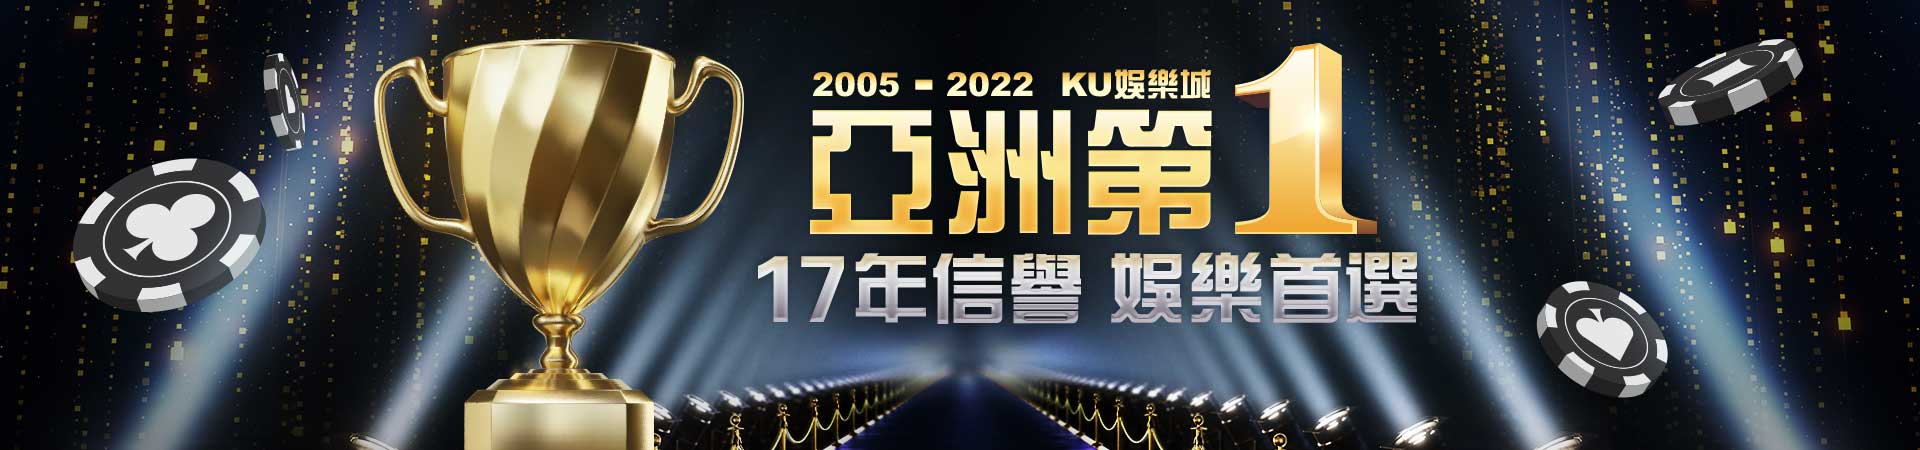 2005 - 2022 KU集團 - EX娛樂城 亞洲第1, 17年信譽 線上娛樂首選